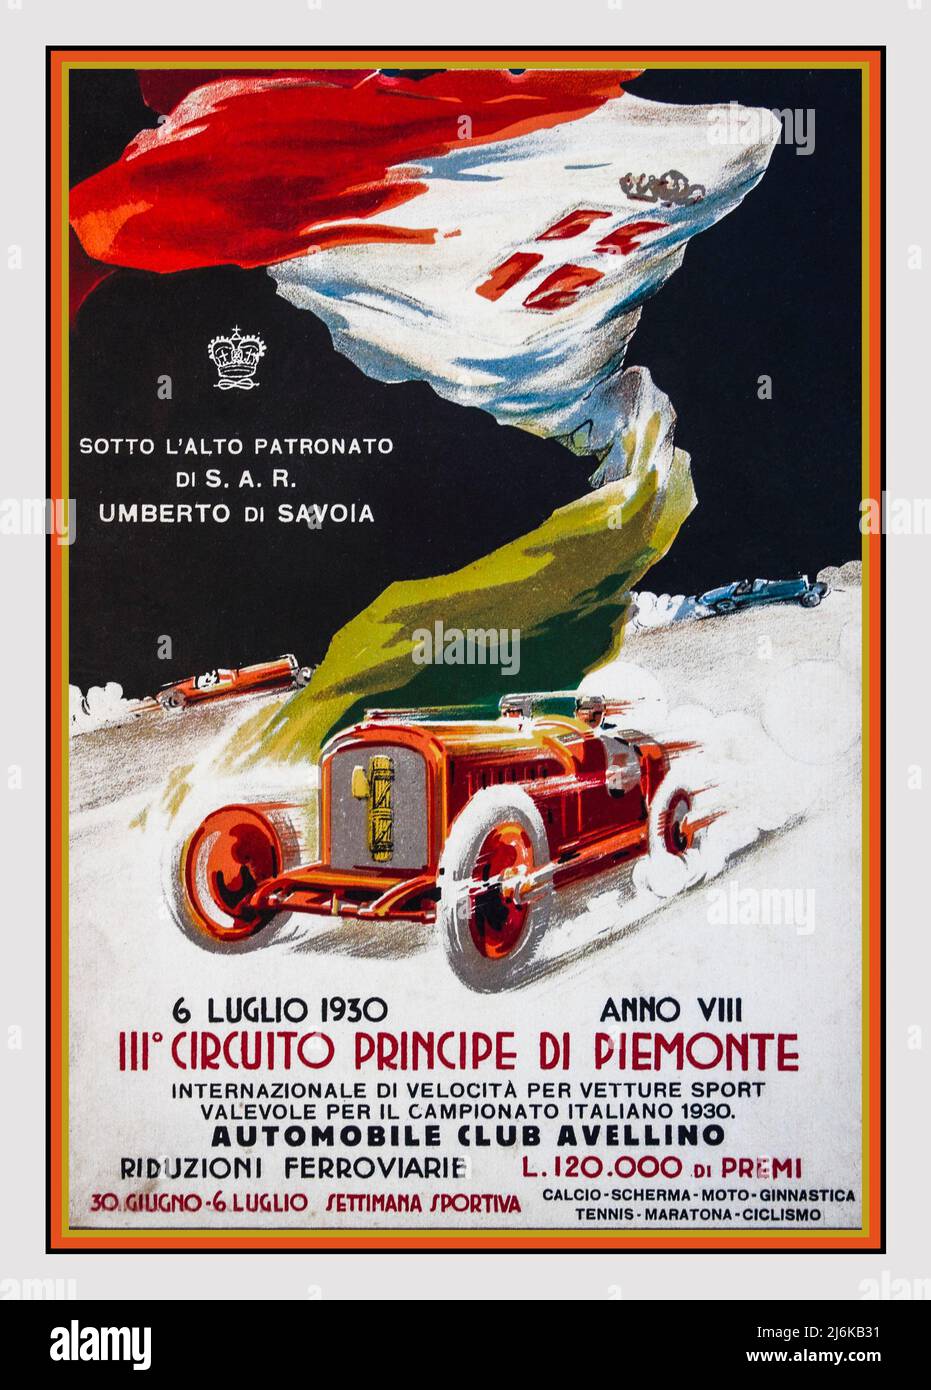 Vintage 1930s Motor Racing Poster Circuito Avellino poster. Race dated 6 July 1930 Circuito Principe Di Piemonte Motor Race Vintage 1930s Poster Automobile Club Avellino Italy Stock Photo